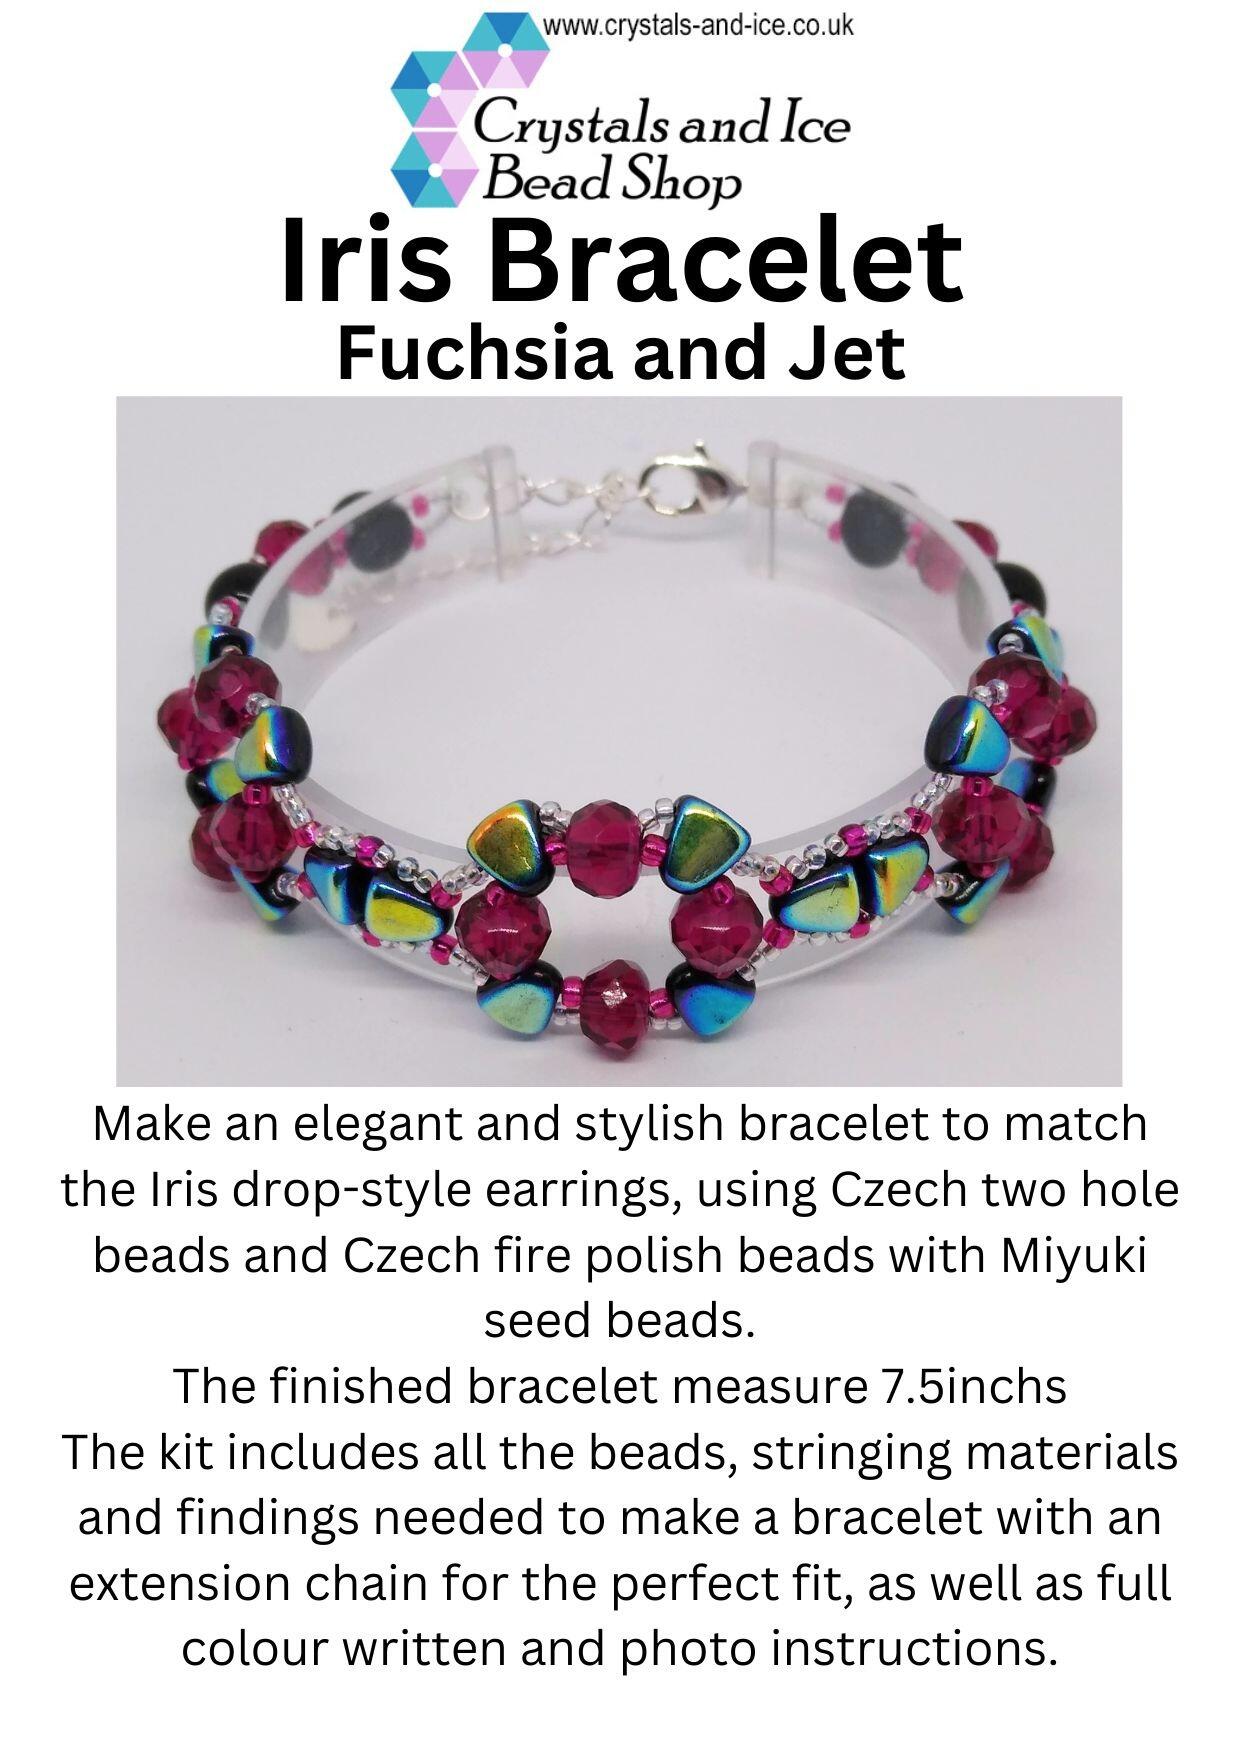 Iris Bracelet Kit - Fuchsia and Jet